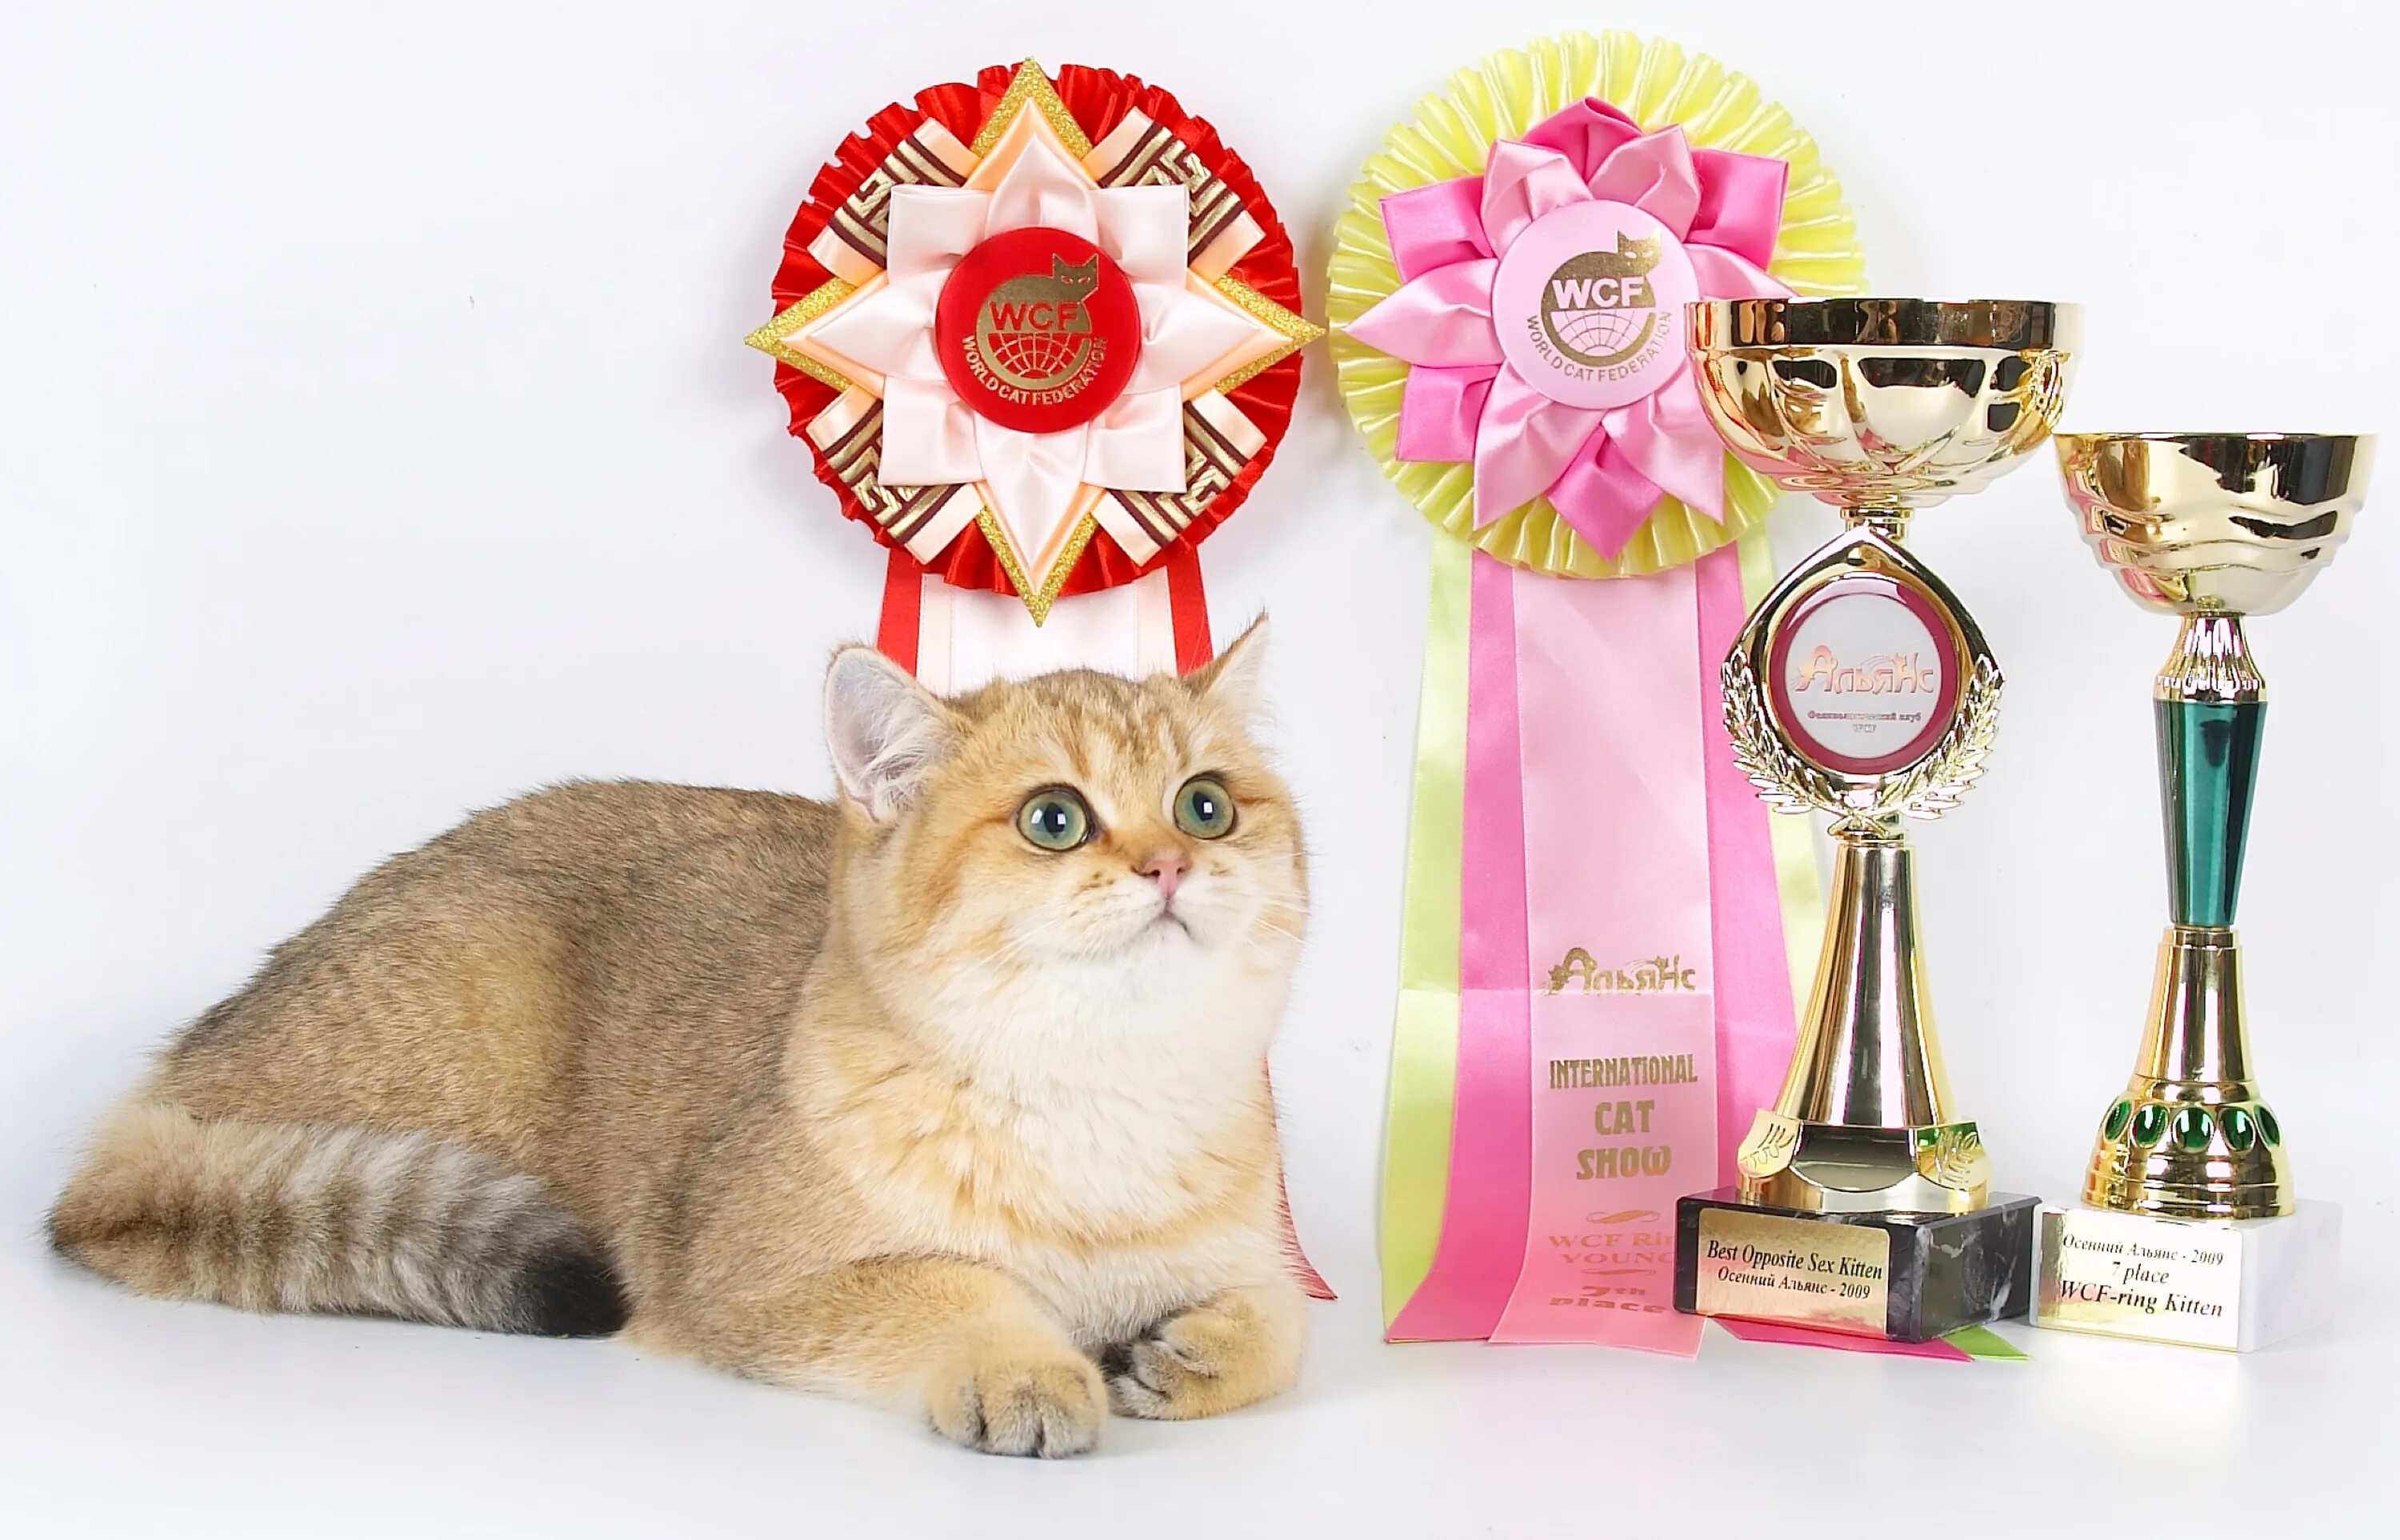 Award для кошек купить. Кошачьи награды. Награды кошек на выставке. Награды для кошек. Выставка кошек.